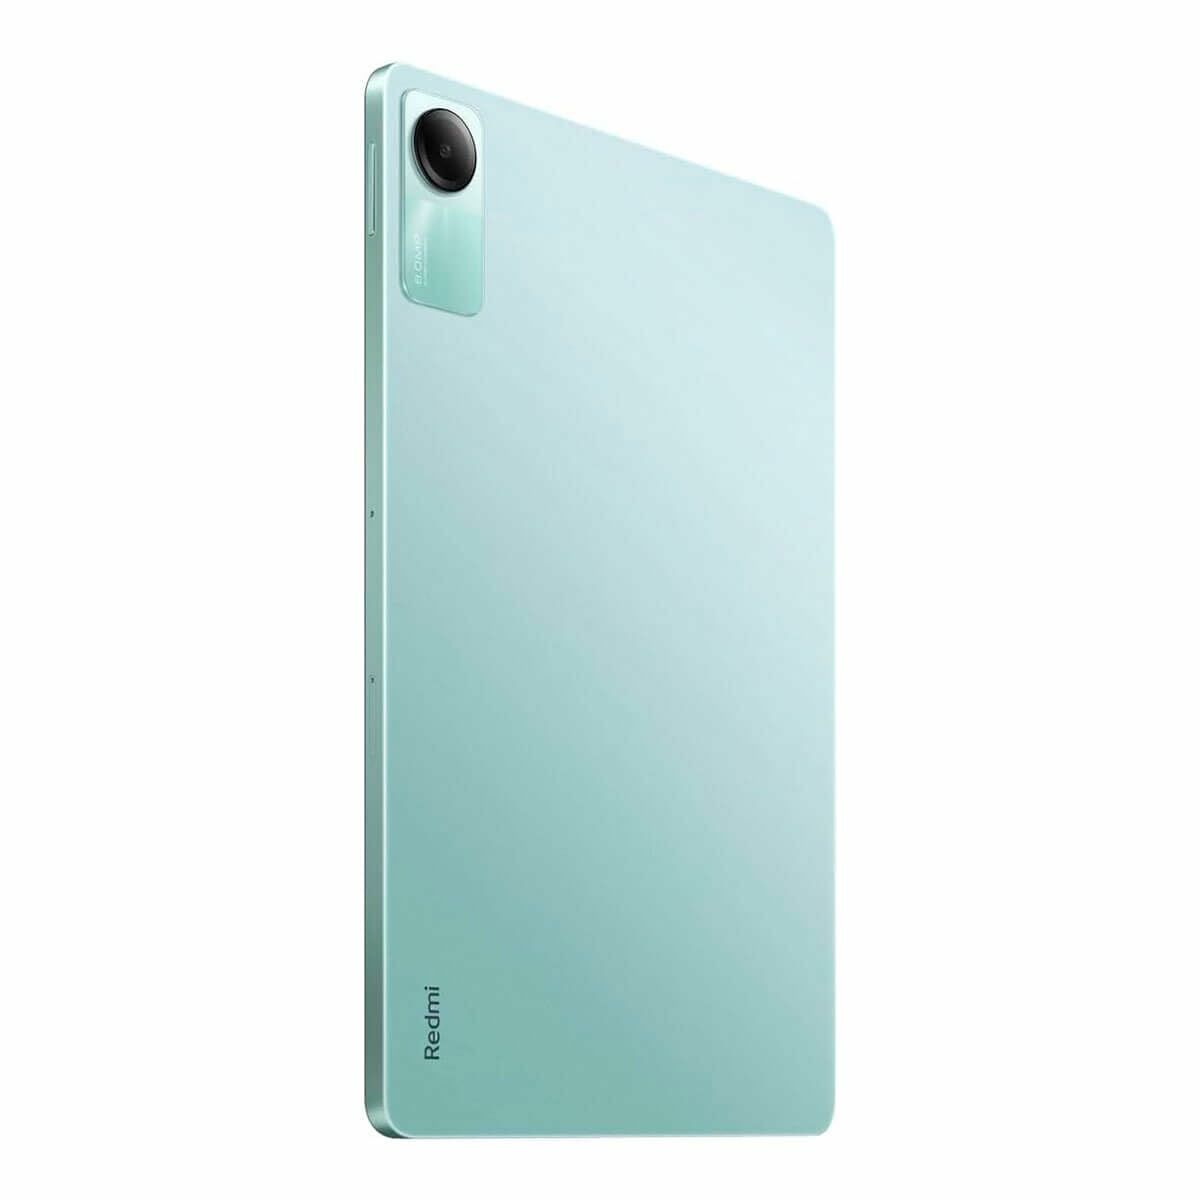 Tablet Xiaomi Redmi Pad SE 8 GB RAM 256 GB 11" Qualcomm Snapdragon 680 Πράσινο